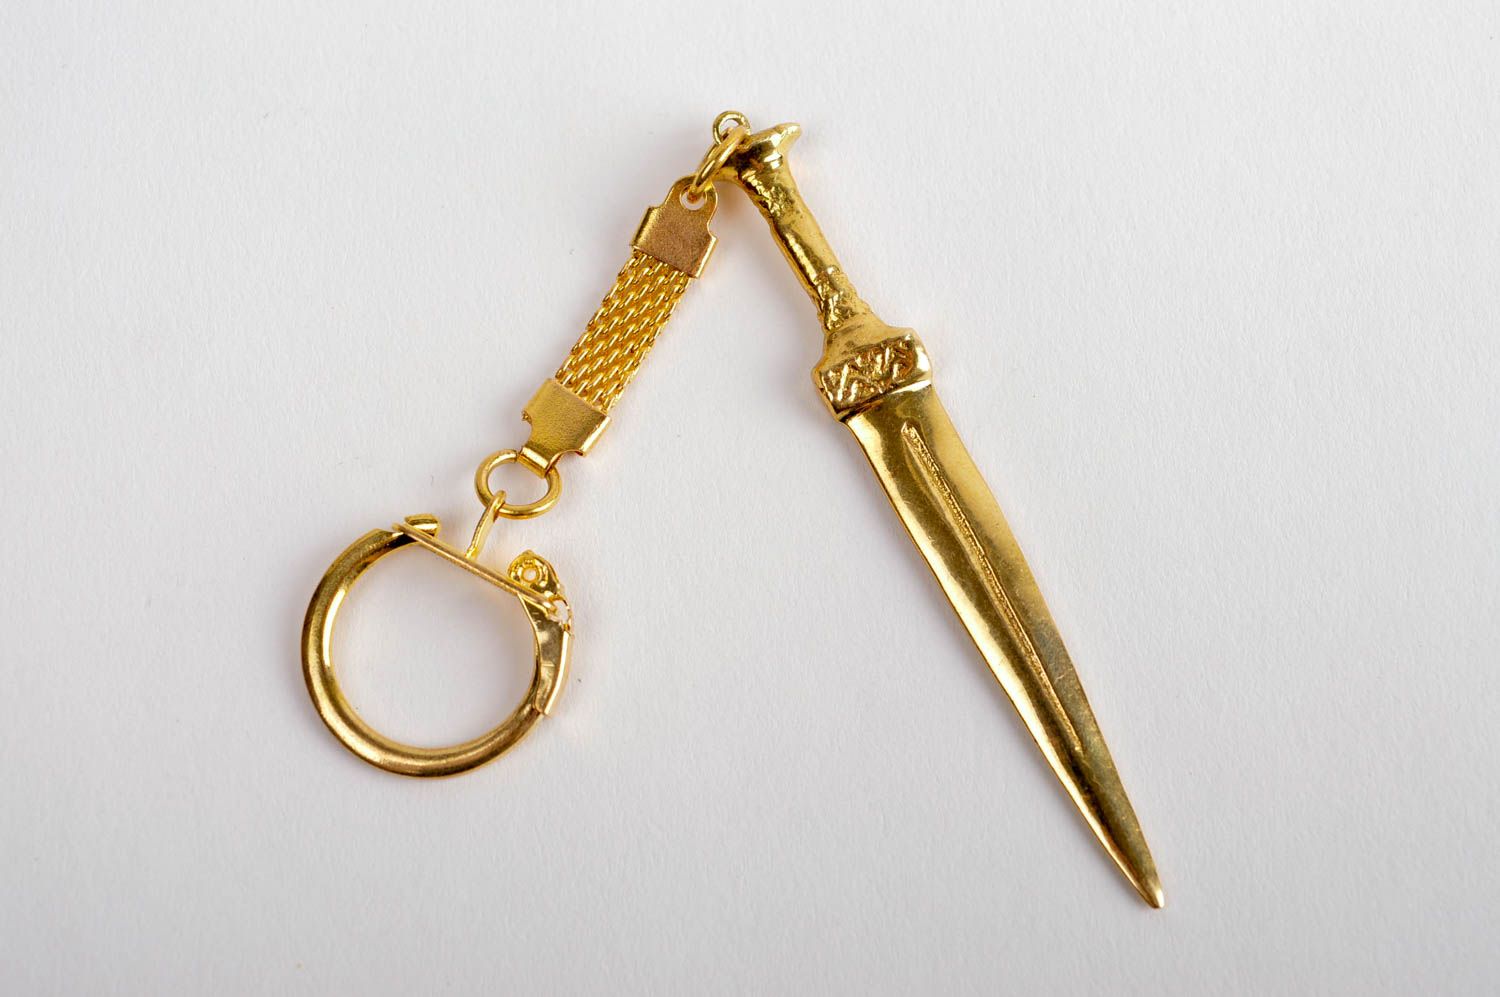 Handmade Schlüssel Schmuck Schlüsselanhänger aus Metall Designer Accessoire foto 2